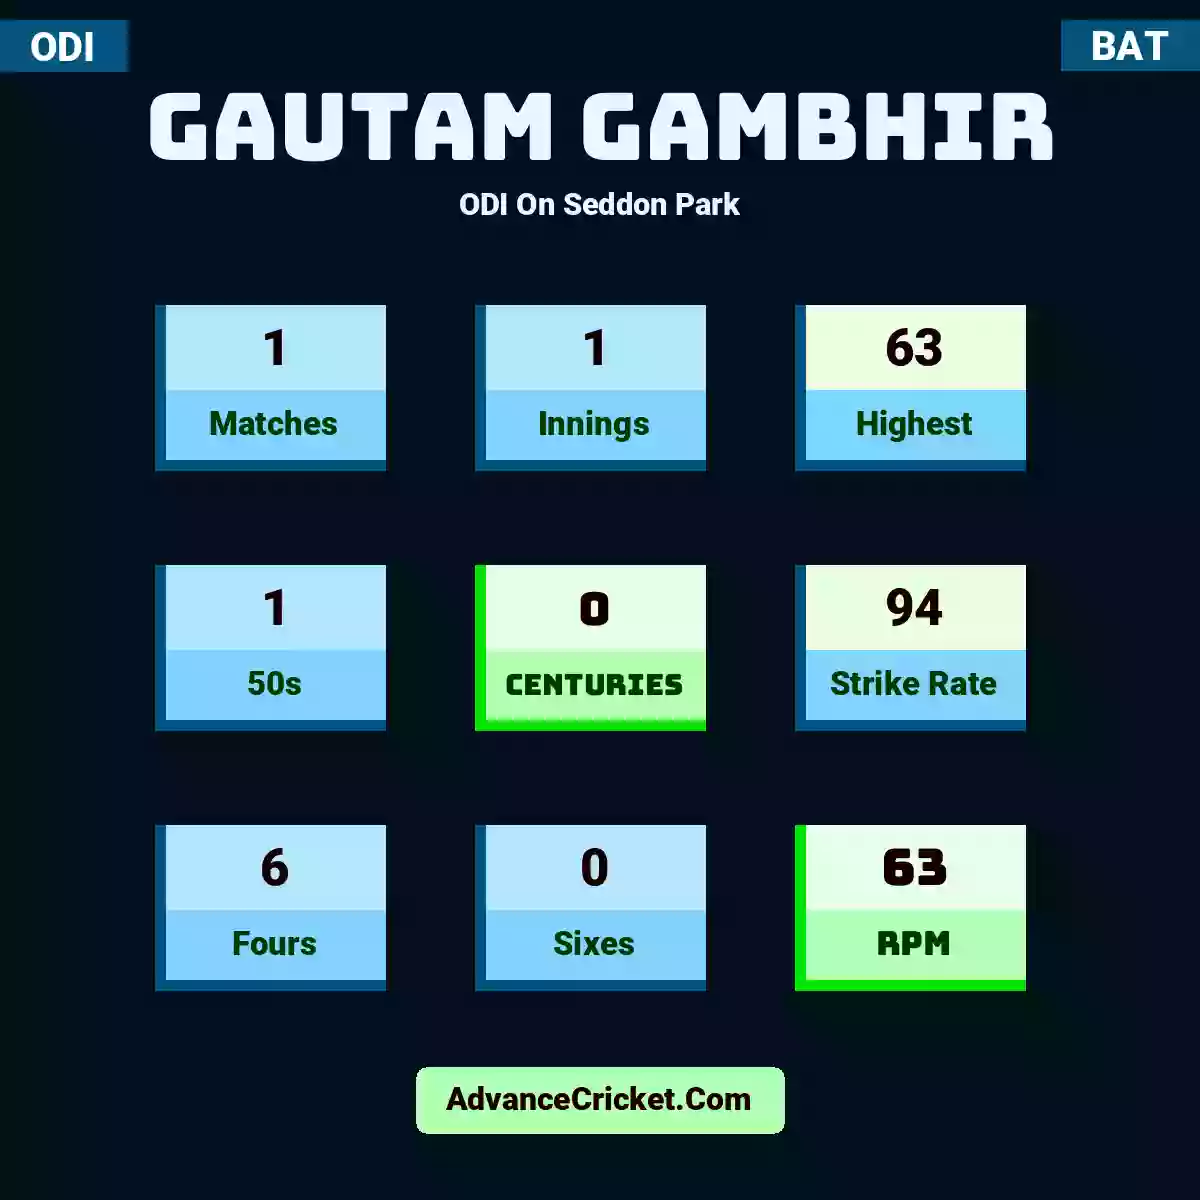 Gautam Gambhir ODI  On Seddon Park, Gautam Gambhir played 1 matches, scored 63 runs as highest, 1 half-centuries, and 0 centuries, with a strike rate of 94. G.Gambhir hit 6 fours and 0 sixes, with an RPM of 63.